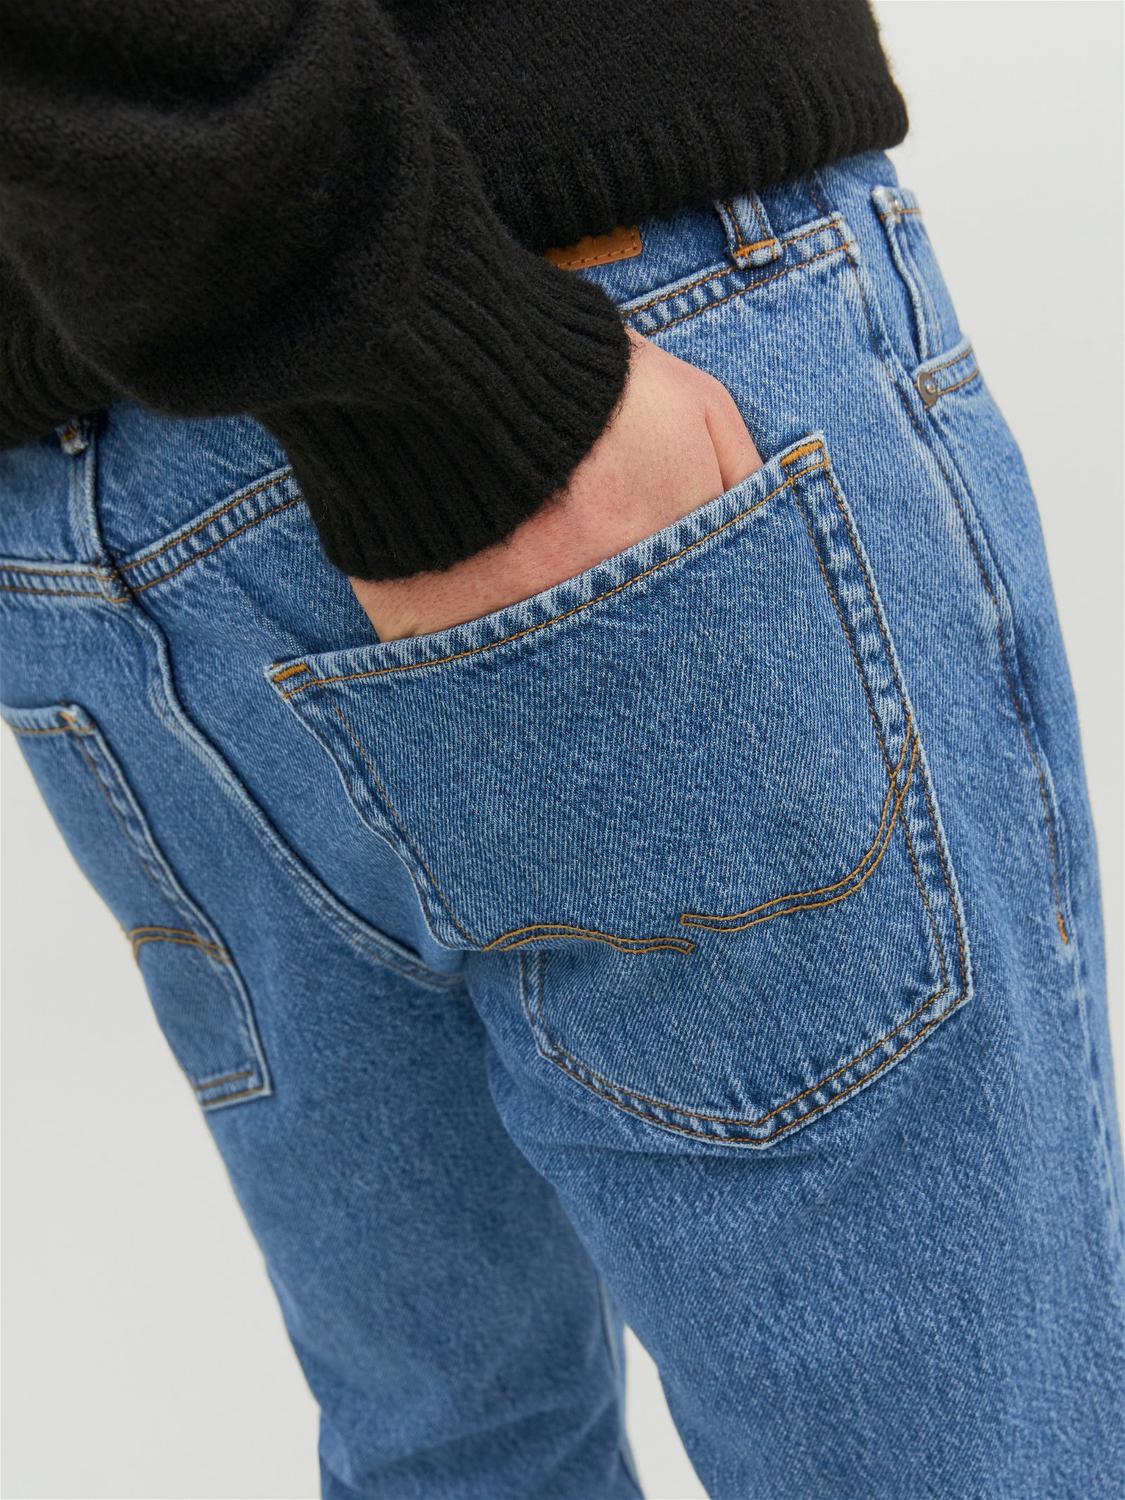 Jack & Jones JJICLARK JJORIGINAL SBD 301 Regular fit Jeans -Blue Denim - 12244959